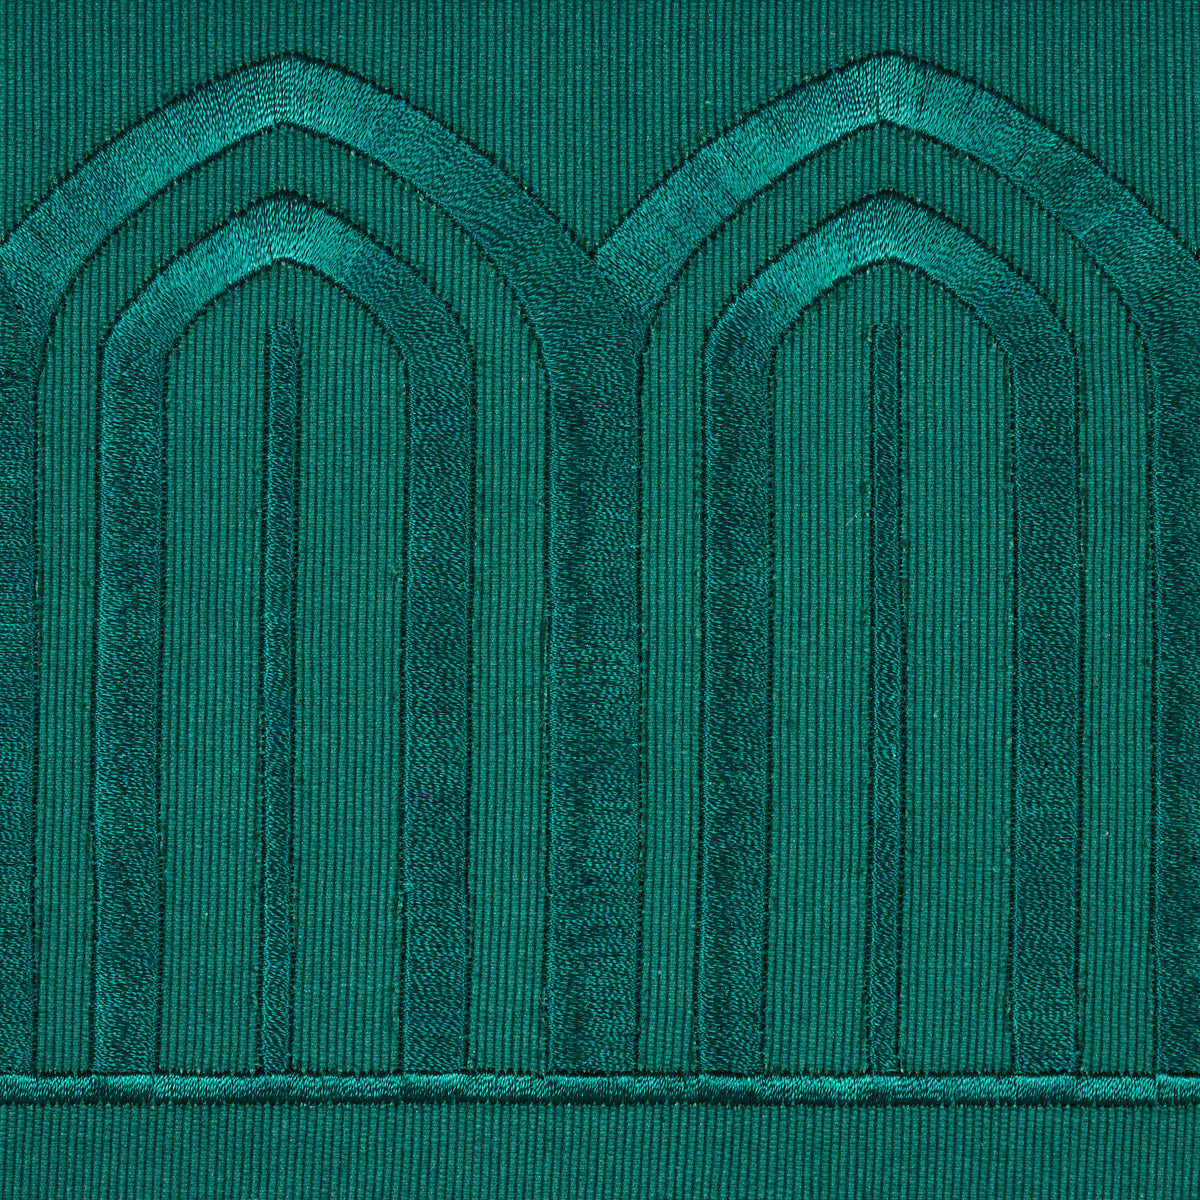 Purchase 70779 | Arches Embroidered Tape Wide, Emerald - Schumacher Trim